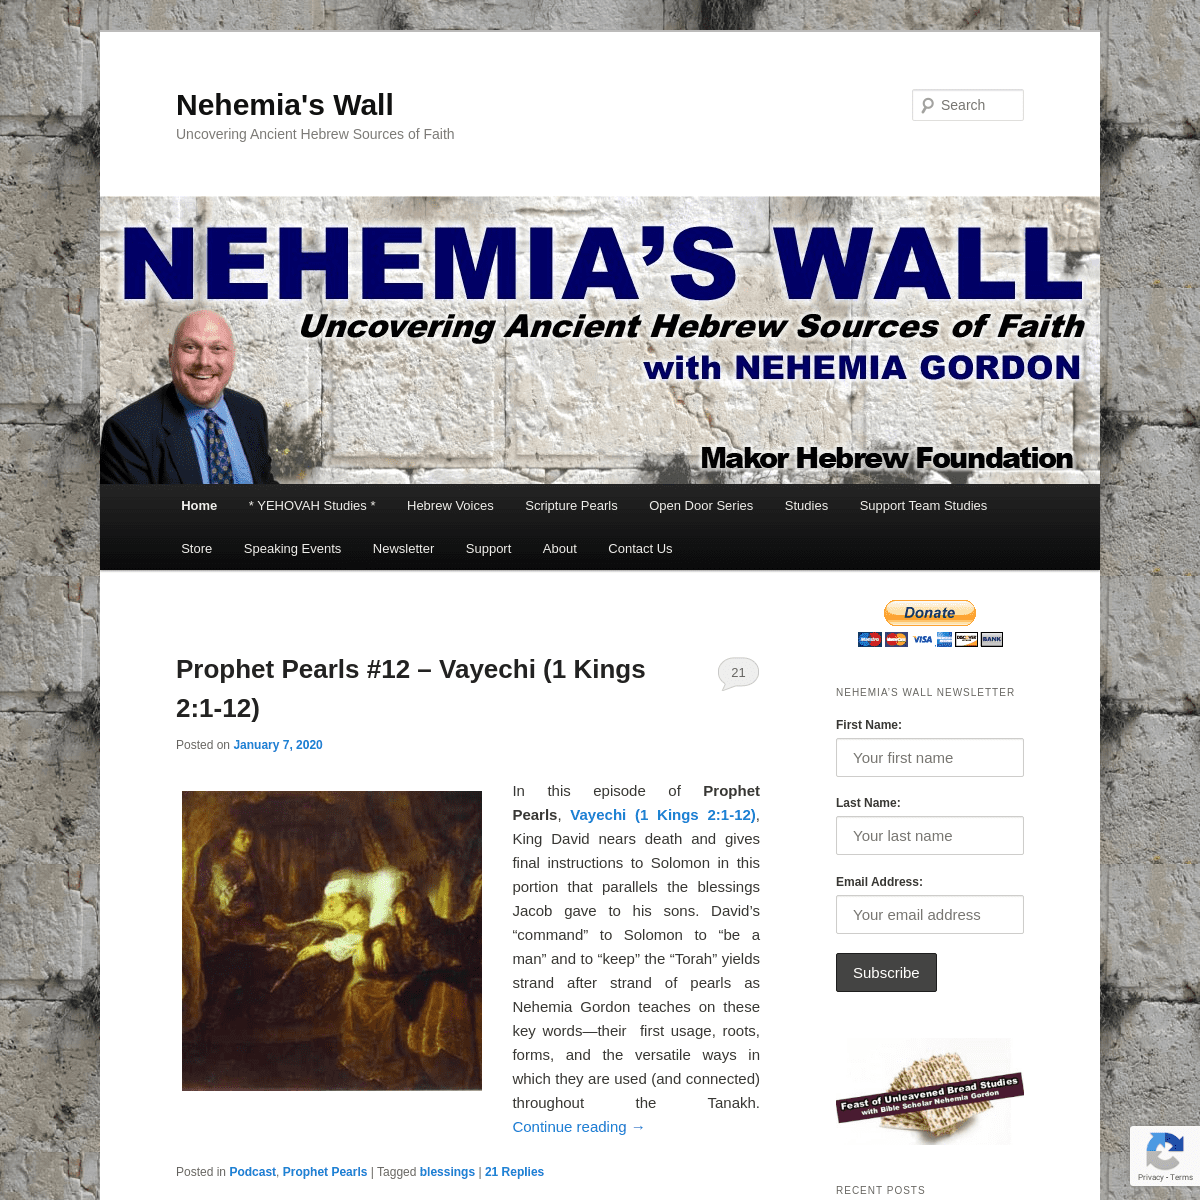 A complete backup of nehemiaswall.com